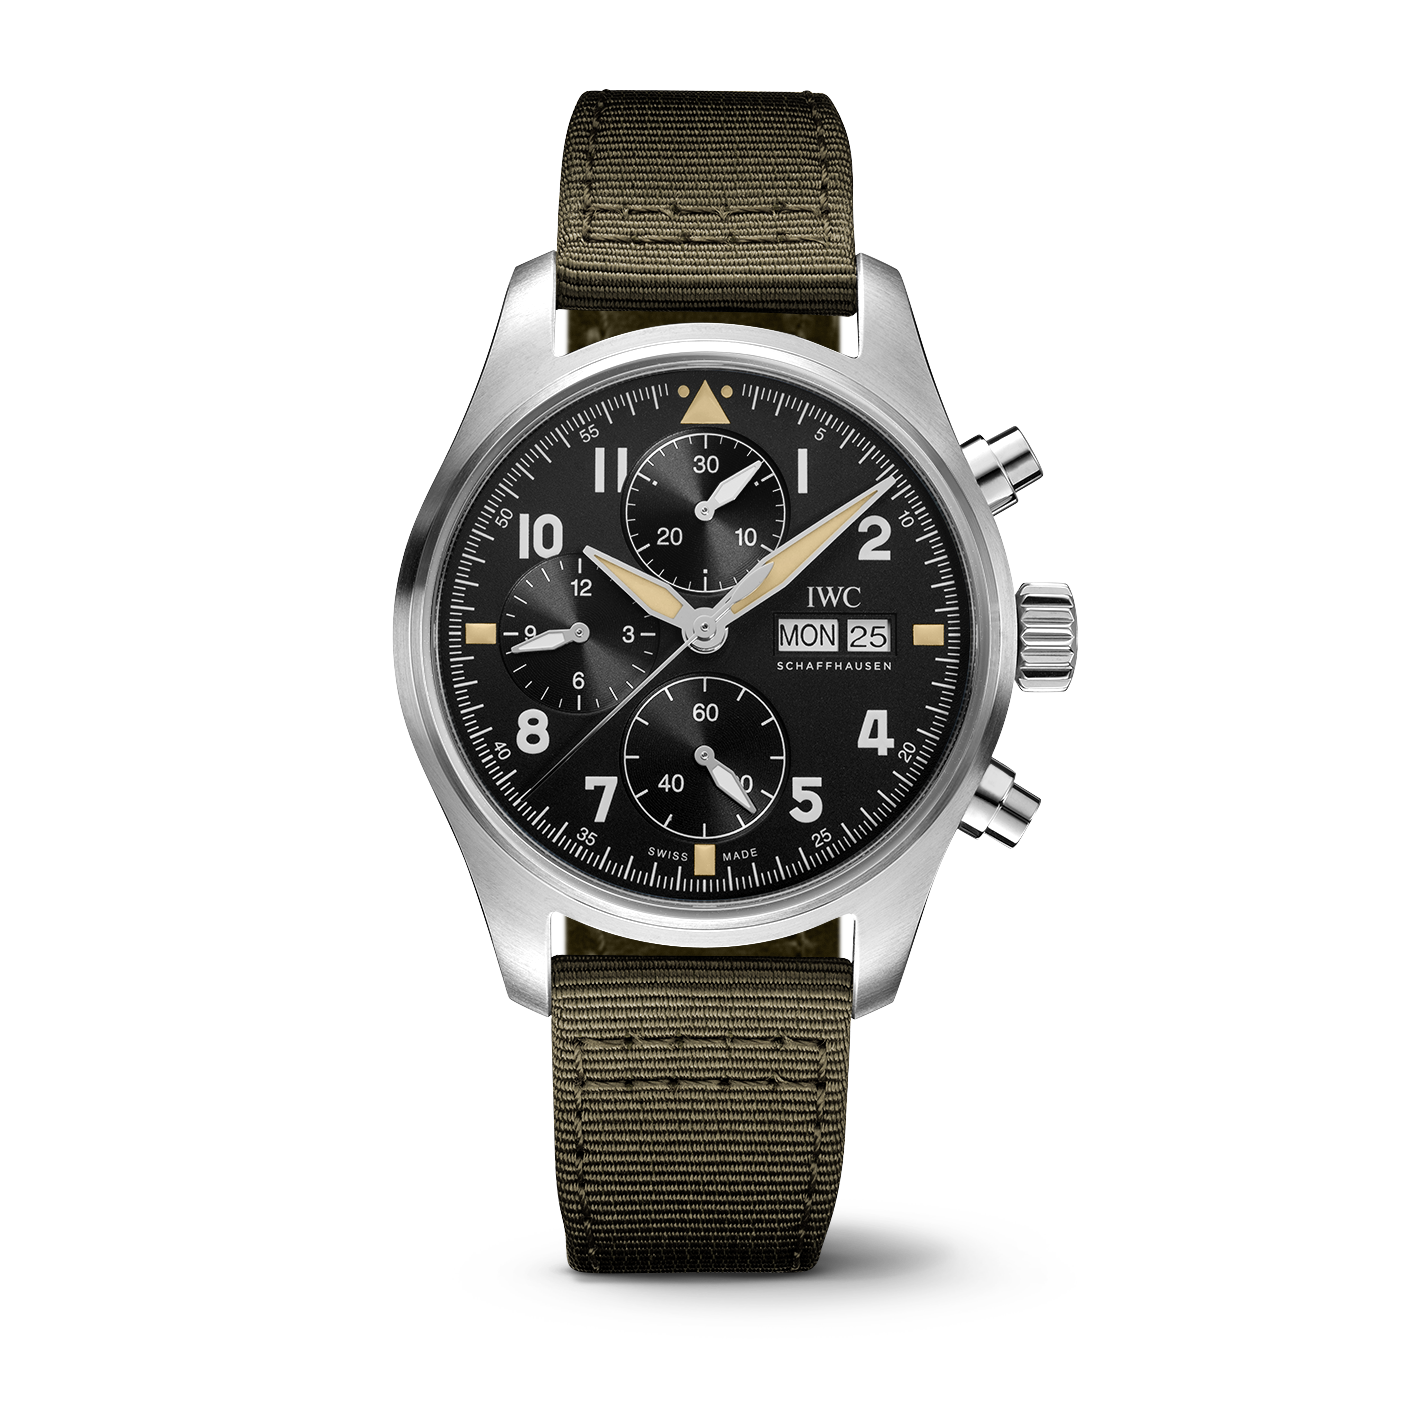 Pilot's Watches Chronograph Spitfire1